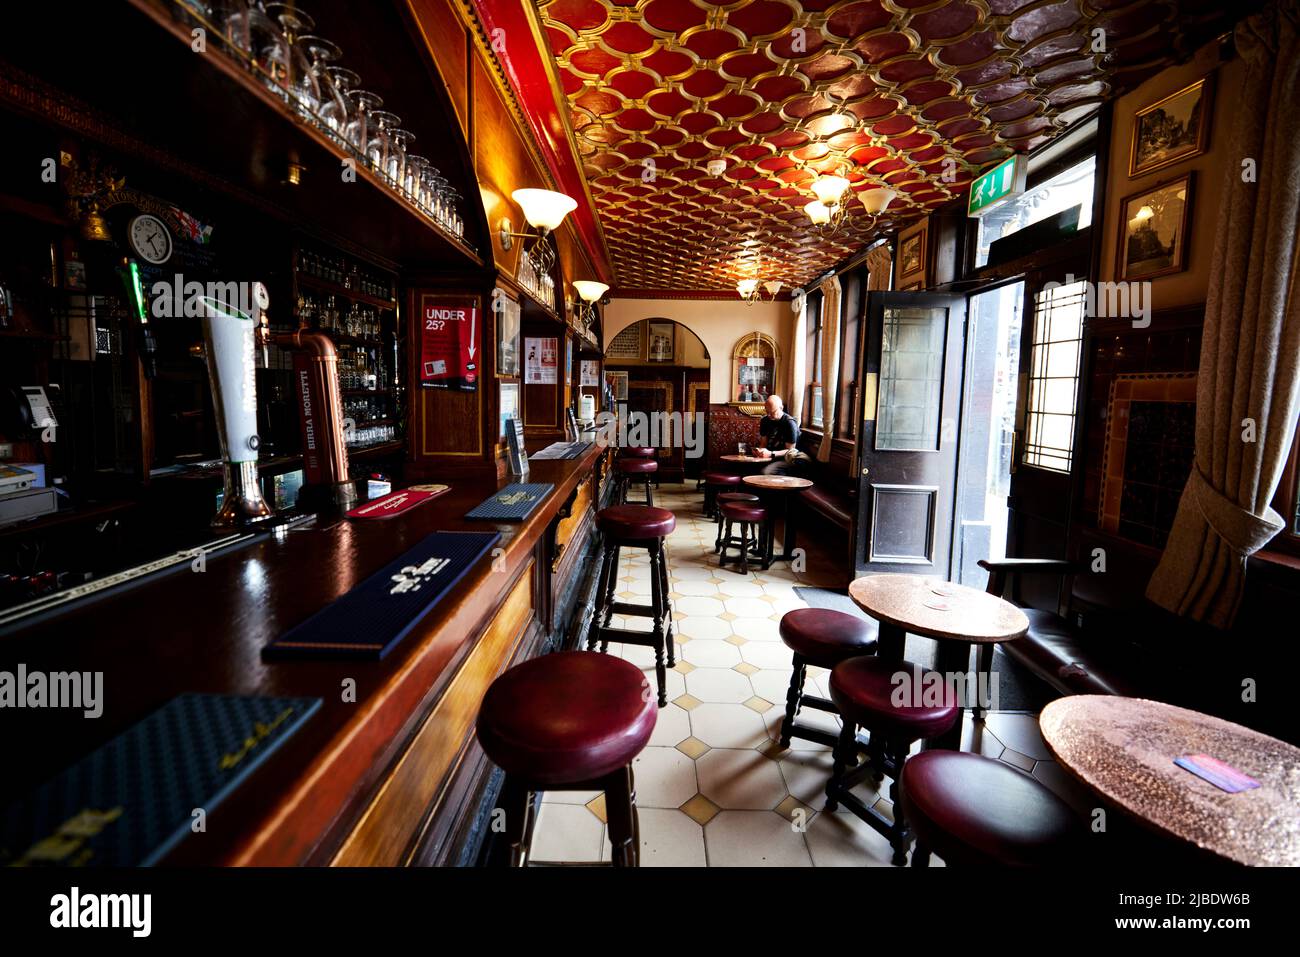 The Briton’s Protection traditional small pub in Manchester city centre Stock Photo